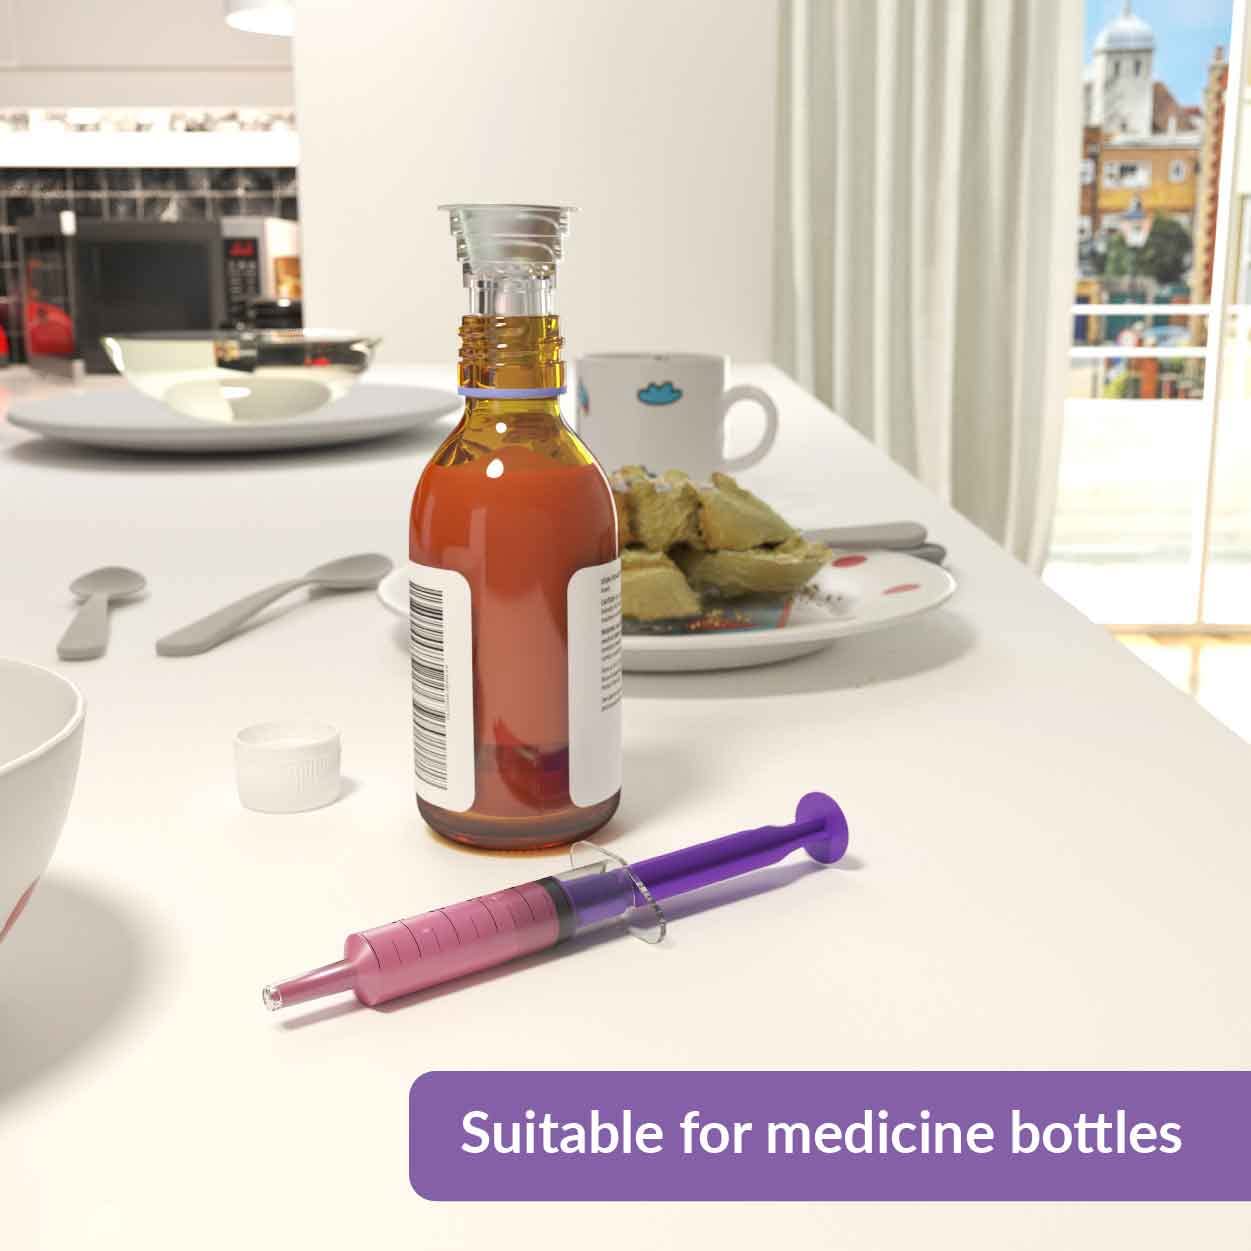 5ml Oral Medicine Syringe and Bottle Plug, Box of 10 - Suitable for Baby, Children, Pets